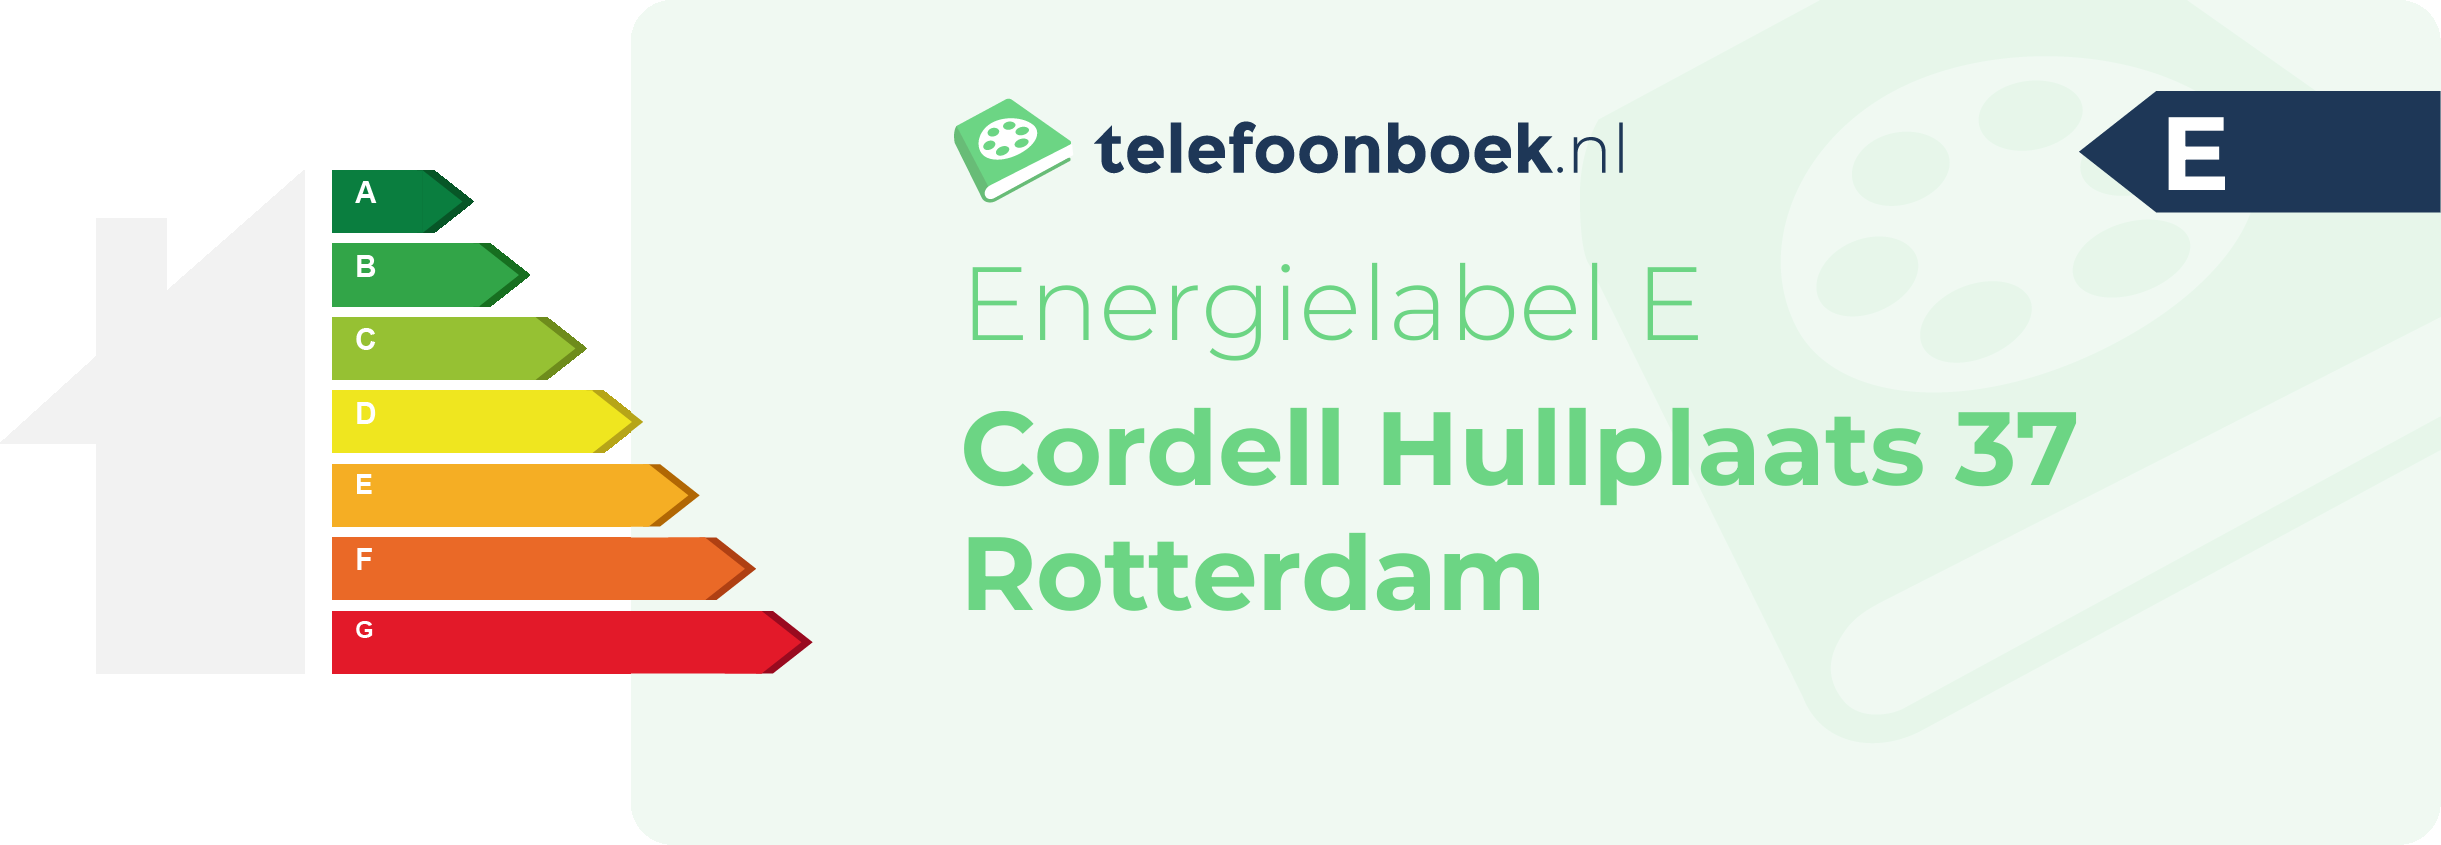 Energielabel Cordell Hullplaats 37 Rotterdam